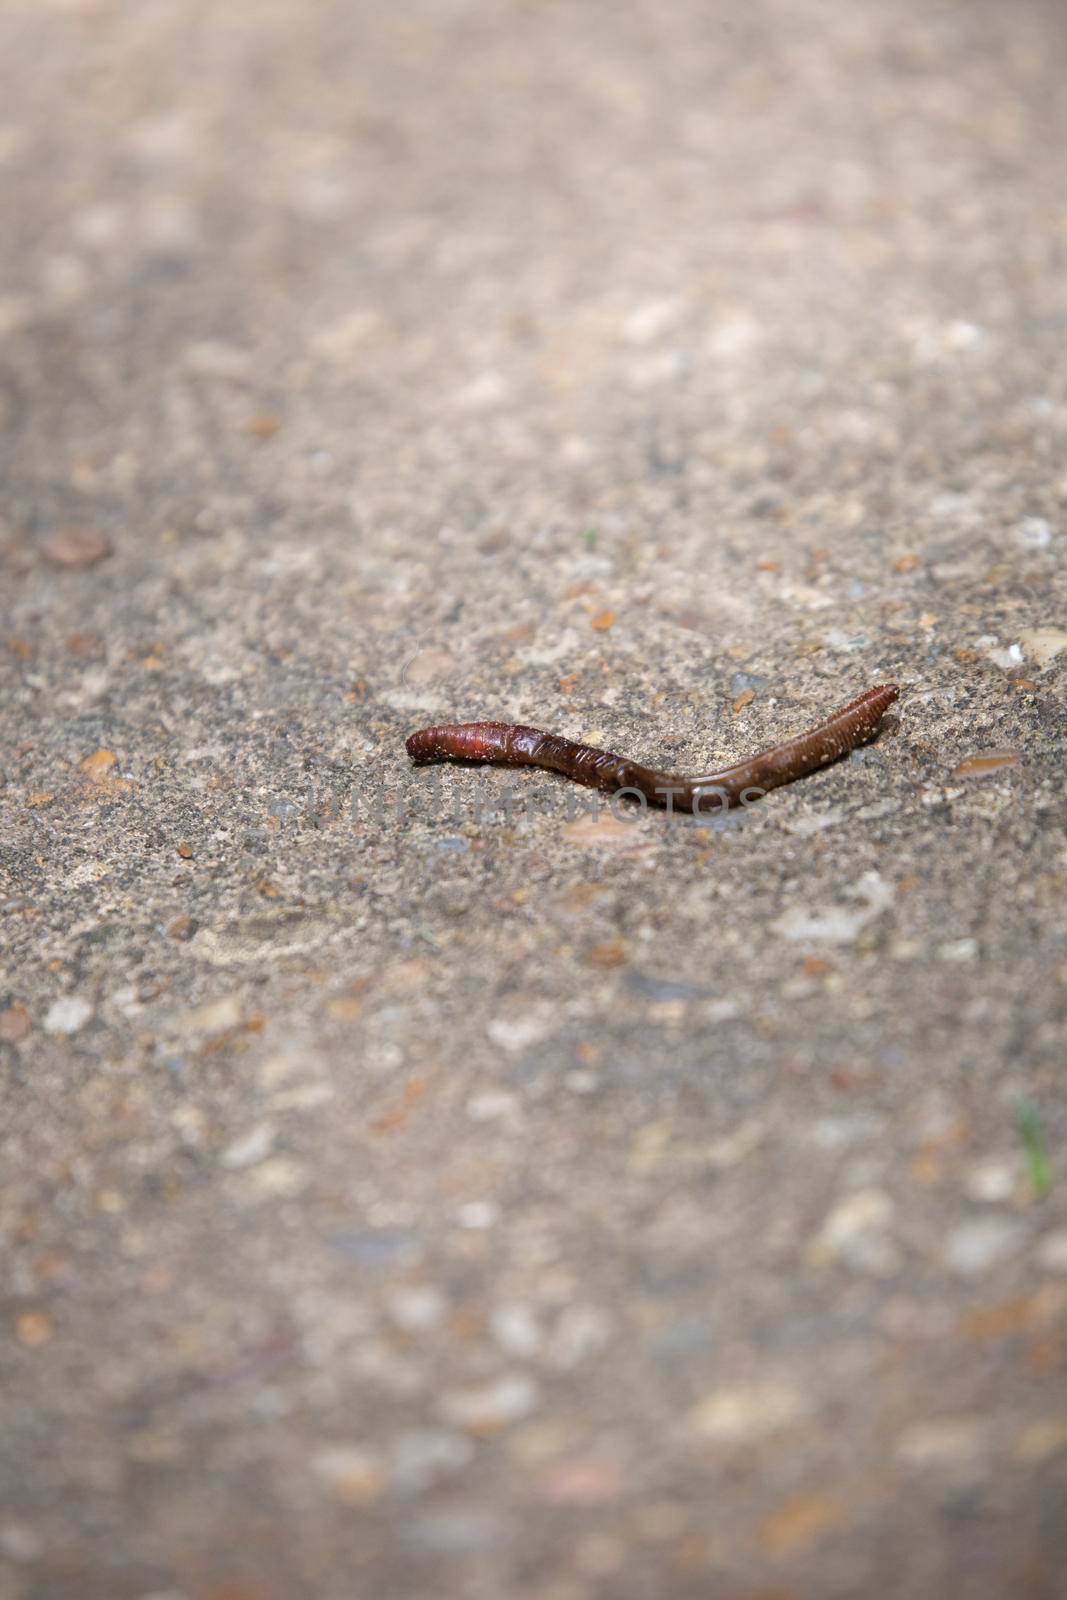 Dried earthworm  on a hot cement sidewalk